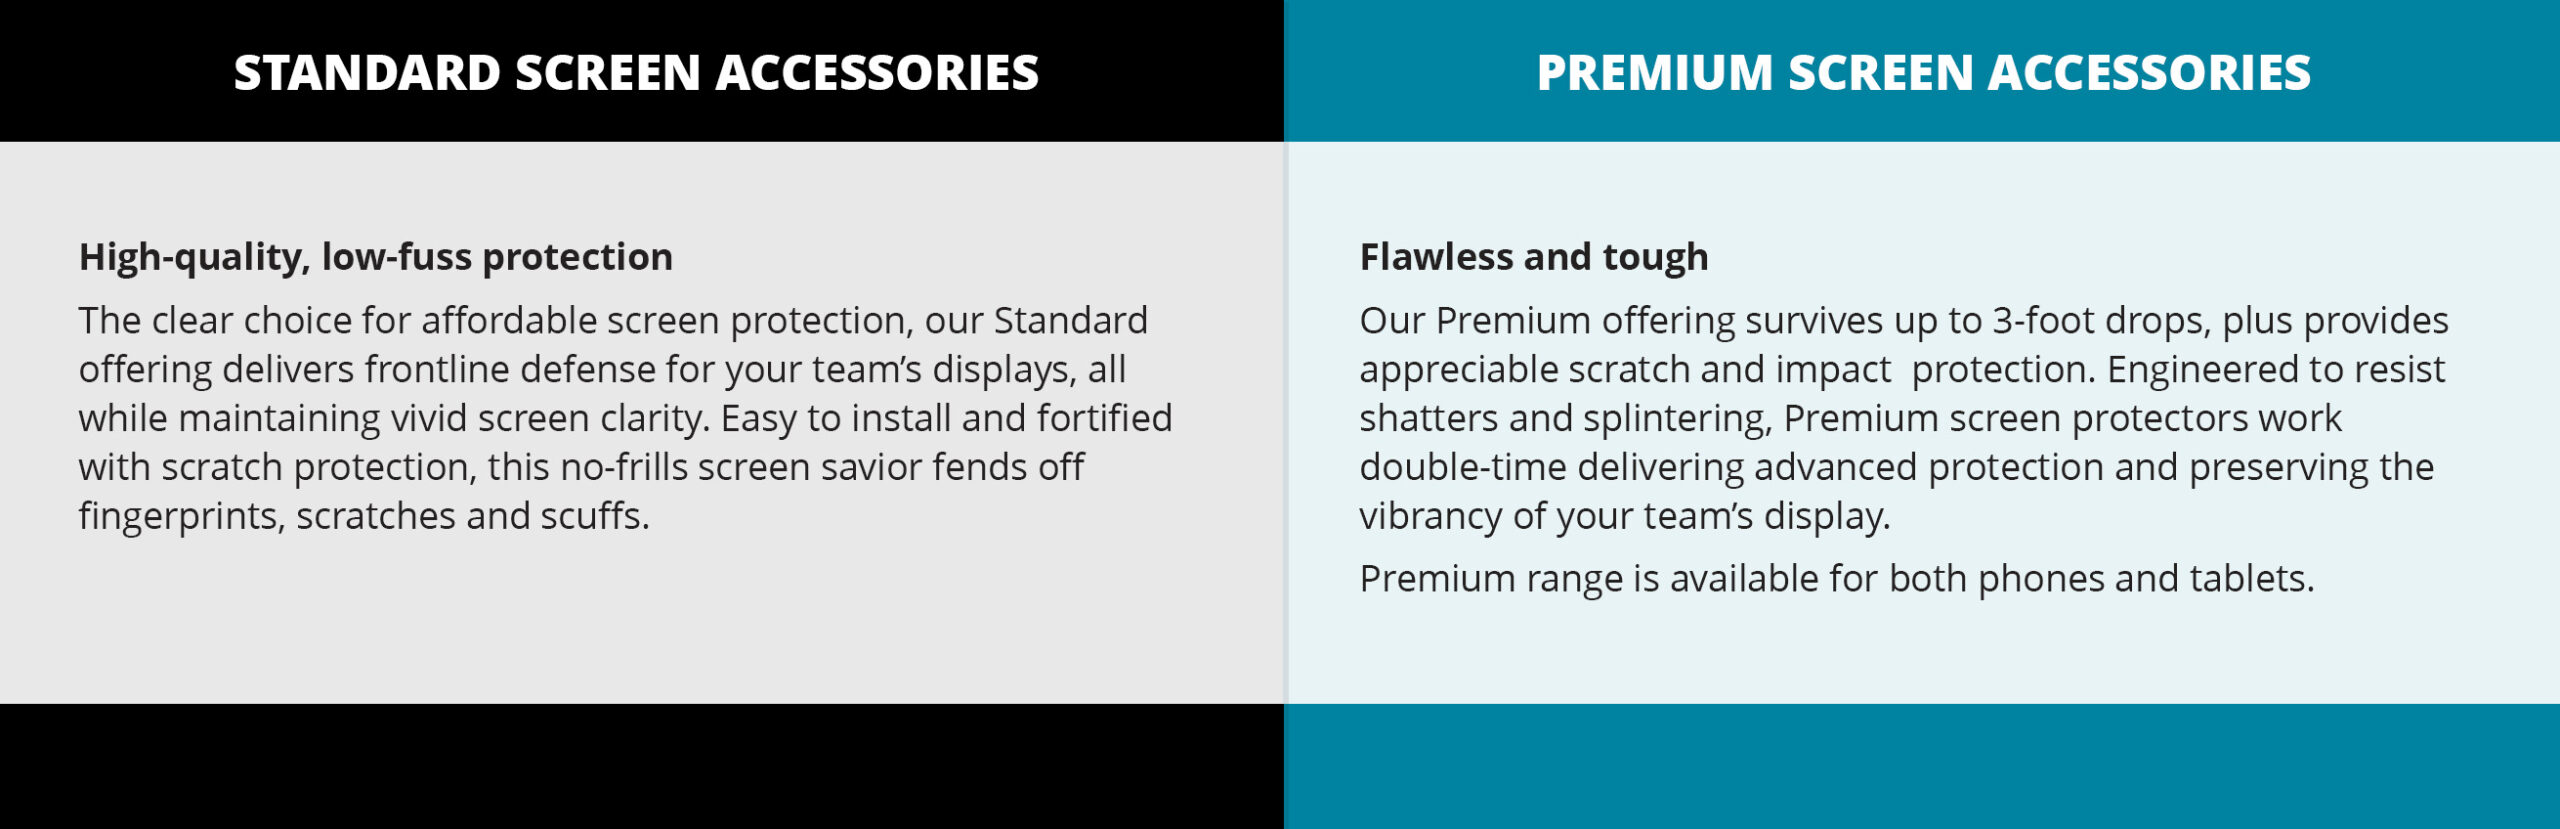 Standard premium comparison